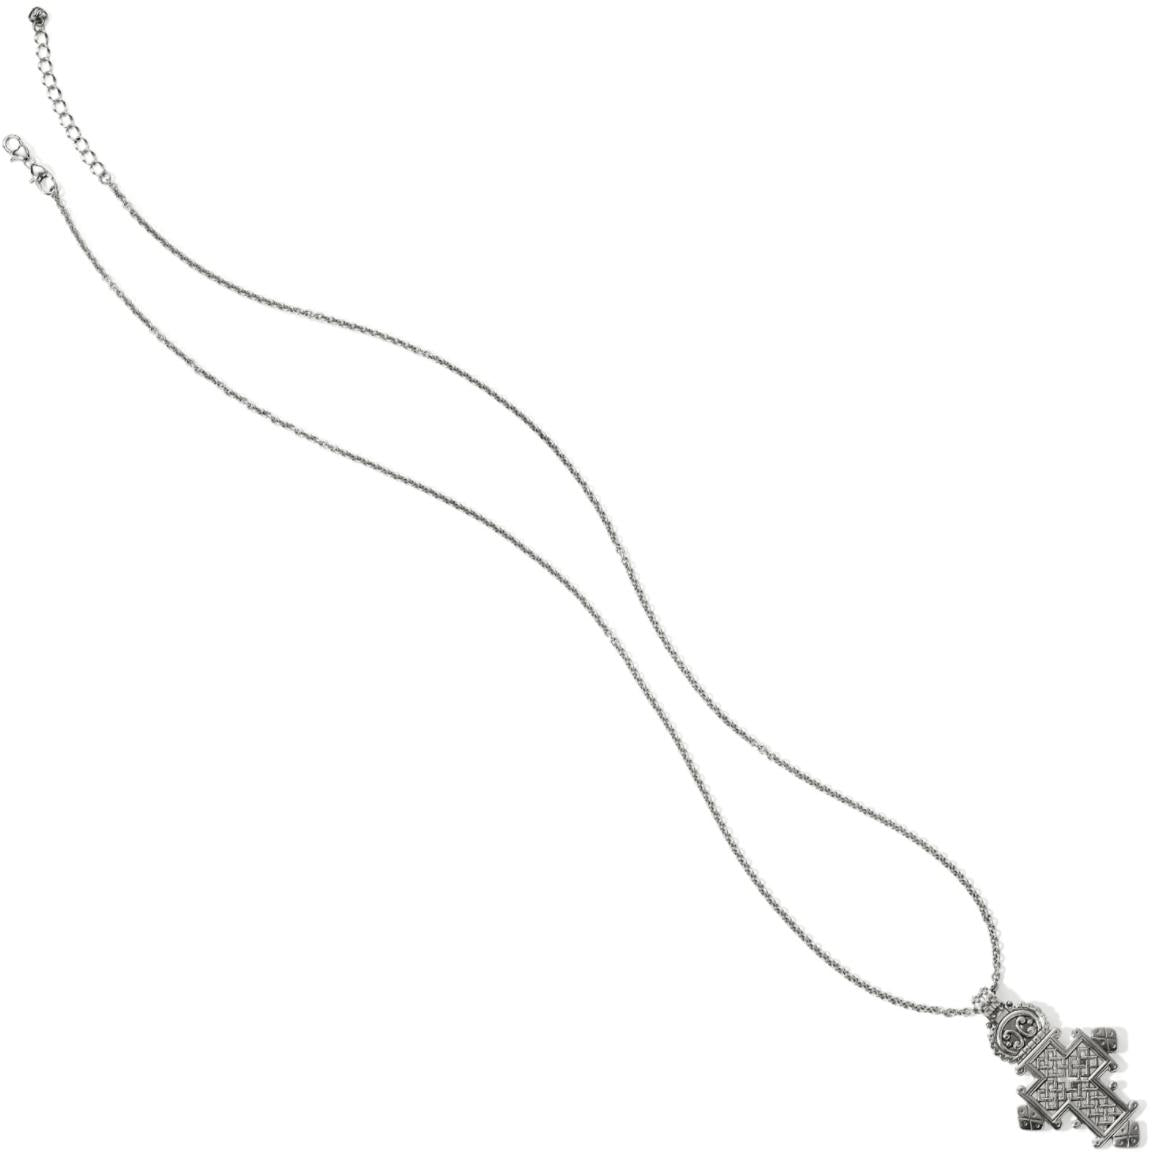 Ethiopian Convertible Cross Necklace - Zinnias Gift Boutique